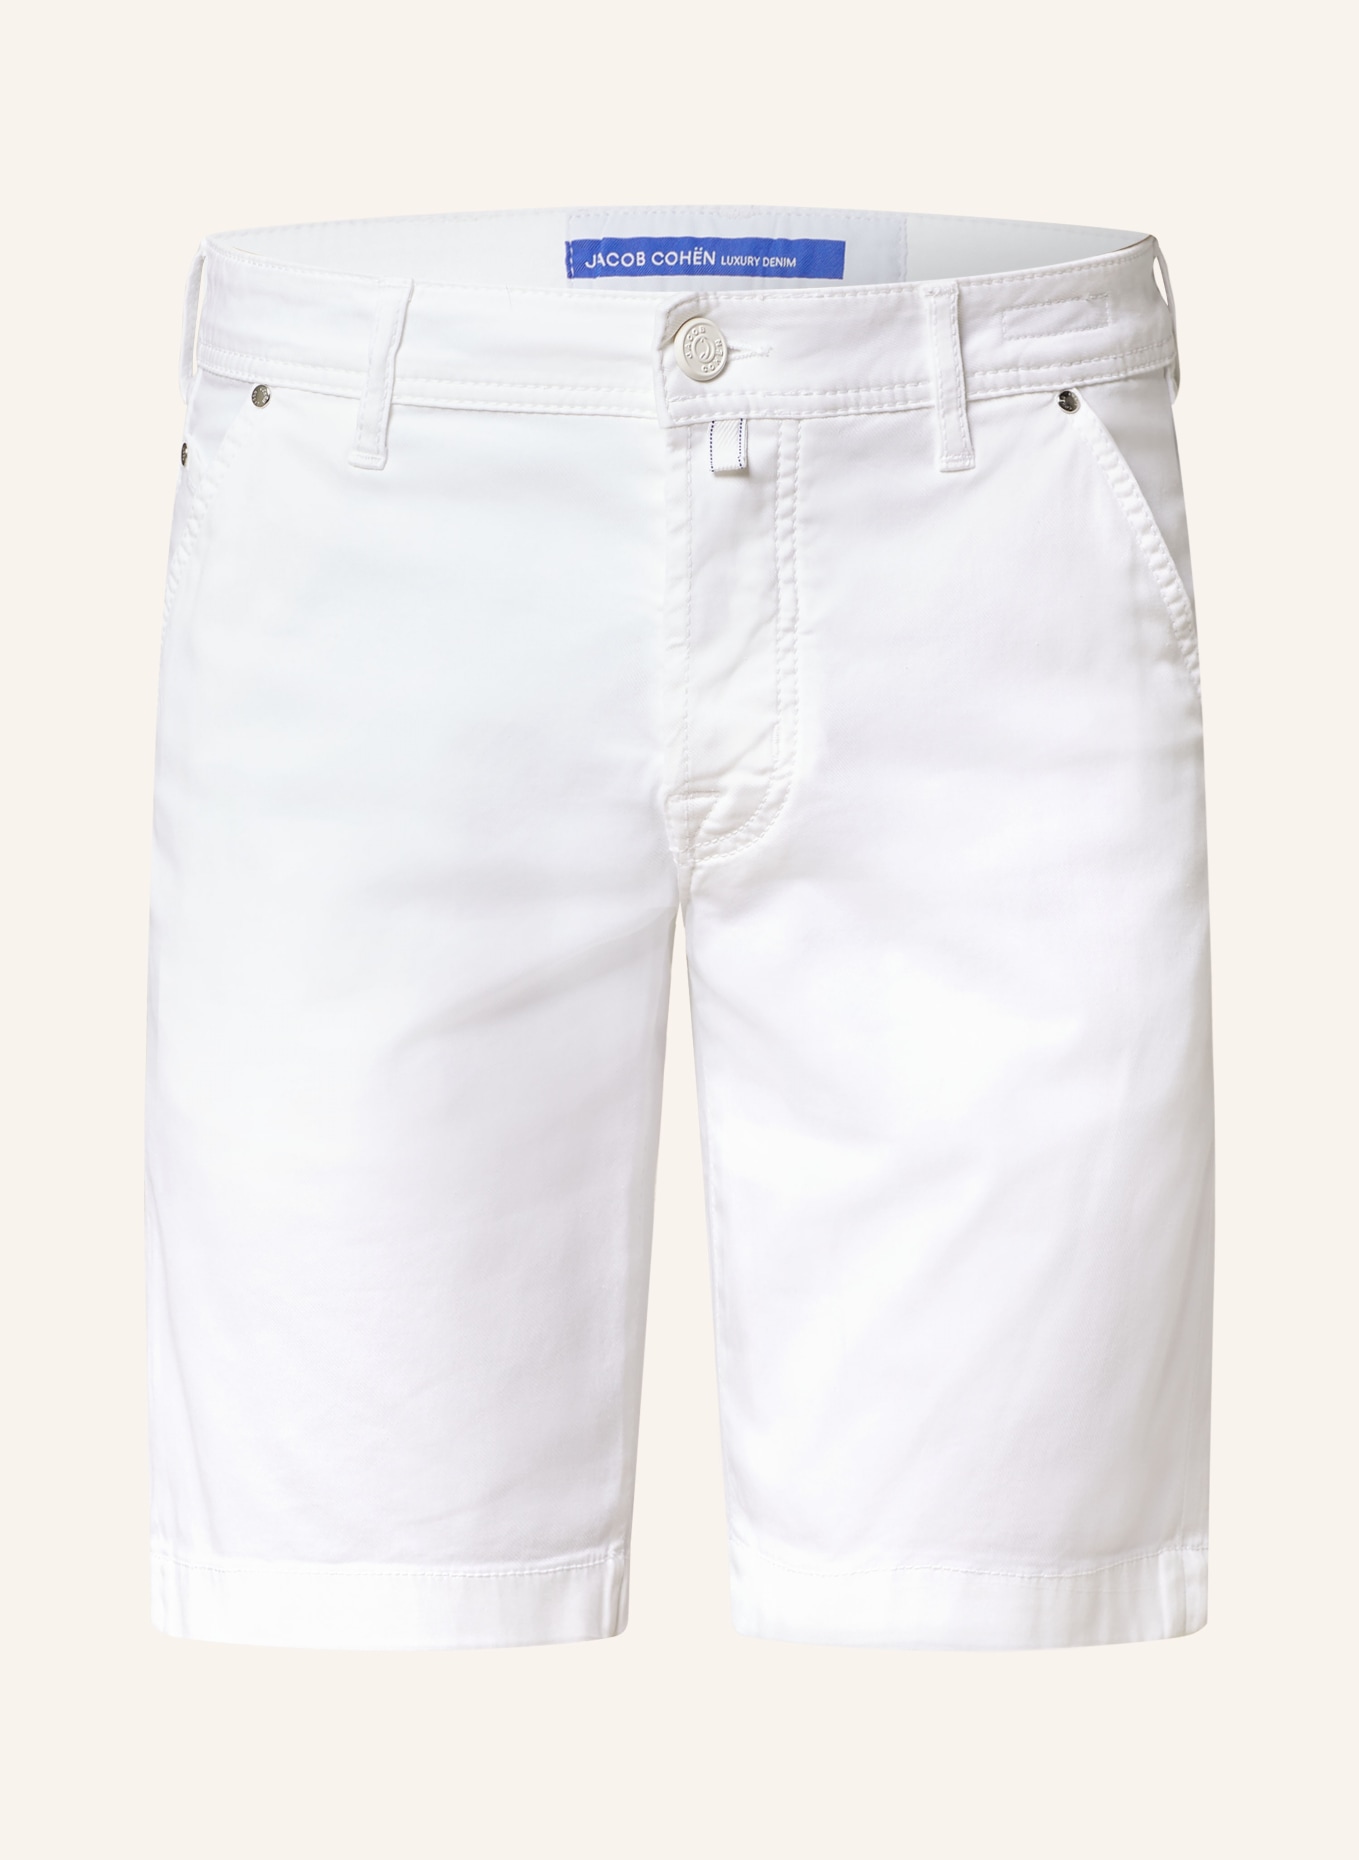 JACOB COHEN Shorts LOU Slim Fit, Farbe: A00 WHITE (Bild 1)